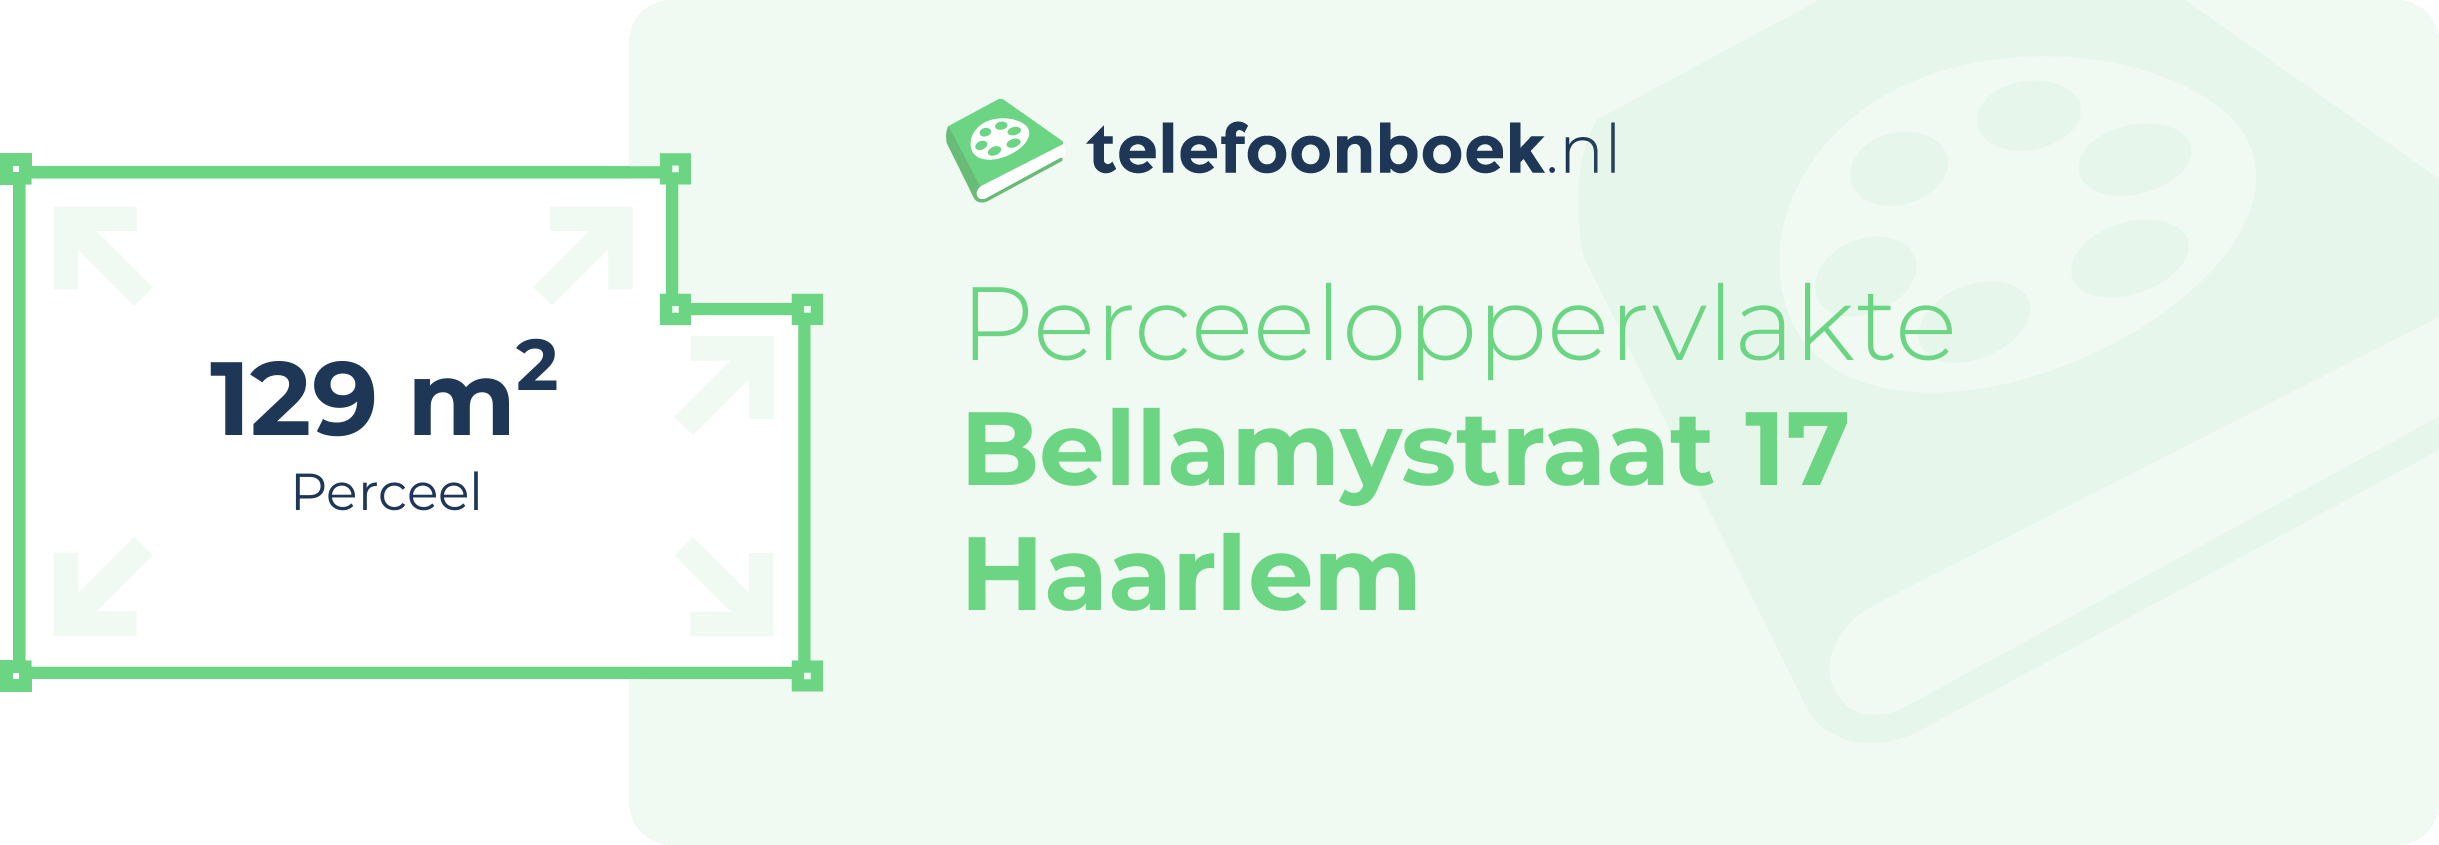 Perceeloppervlakte Bellamystraat 17 Haarlem